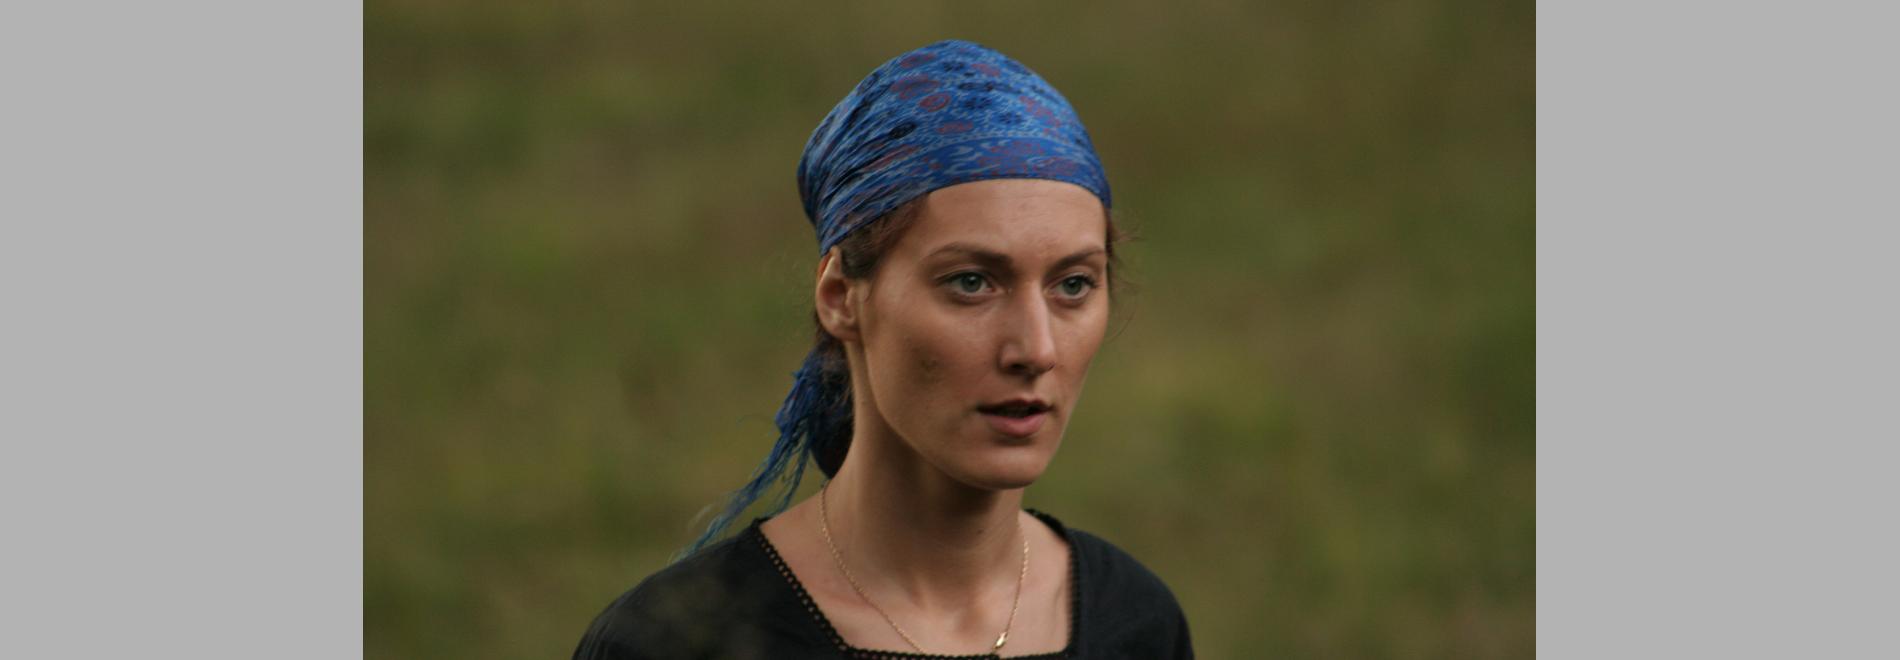 Katalin Varga (Peter Strickland, 2009)